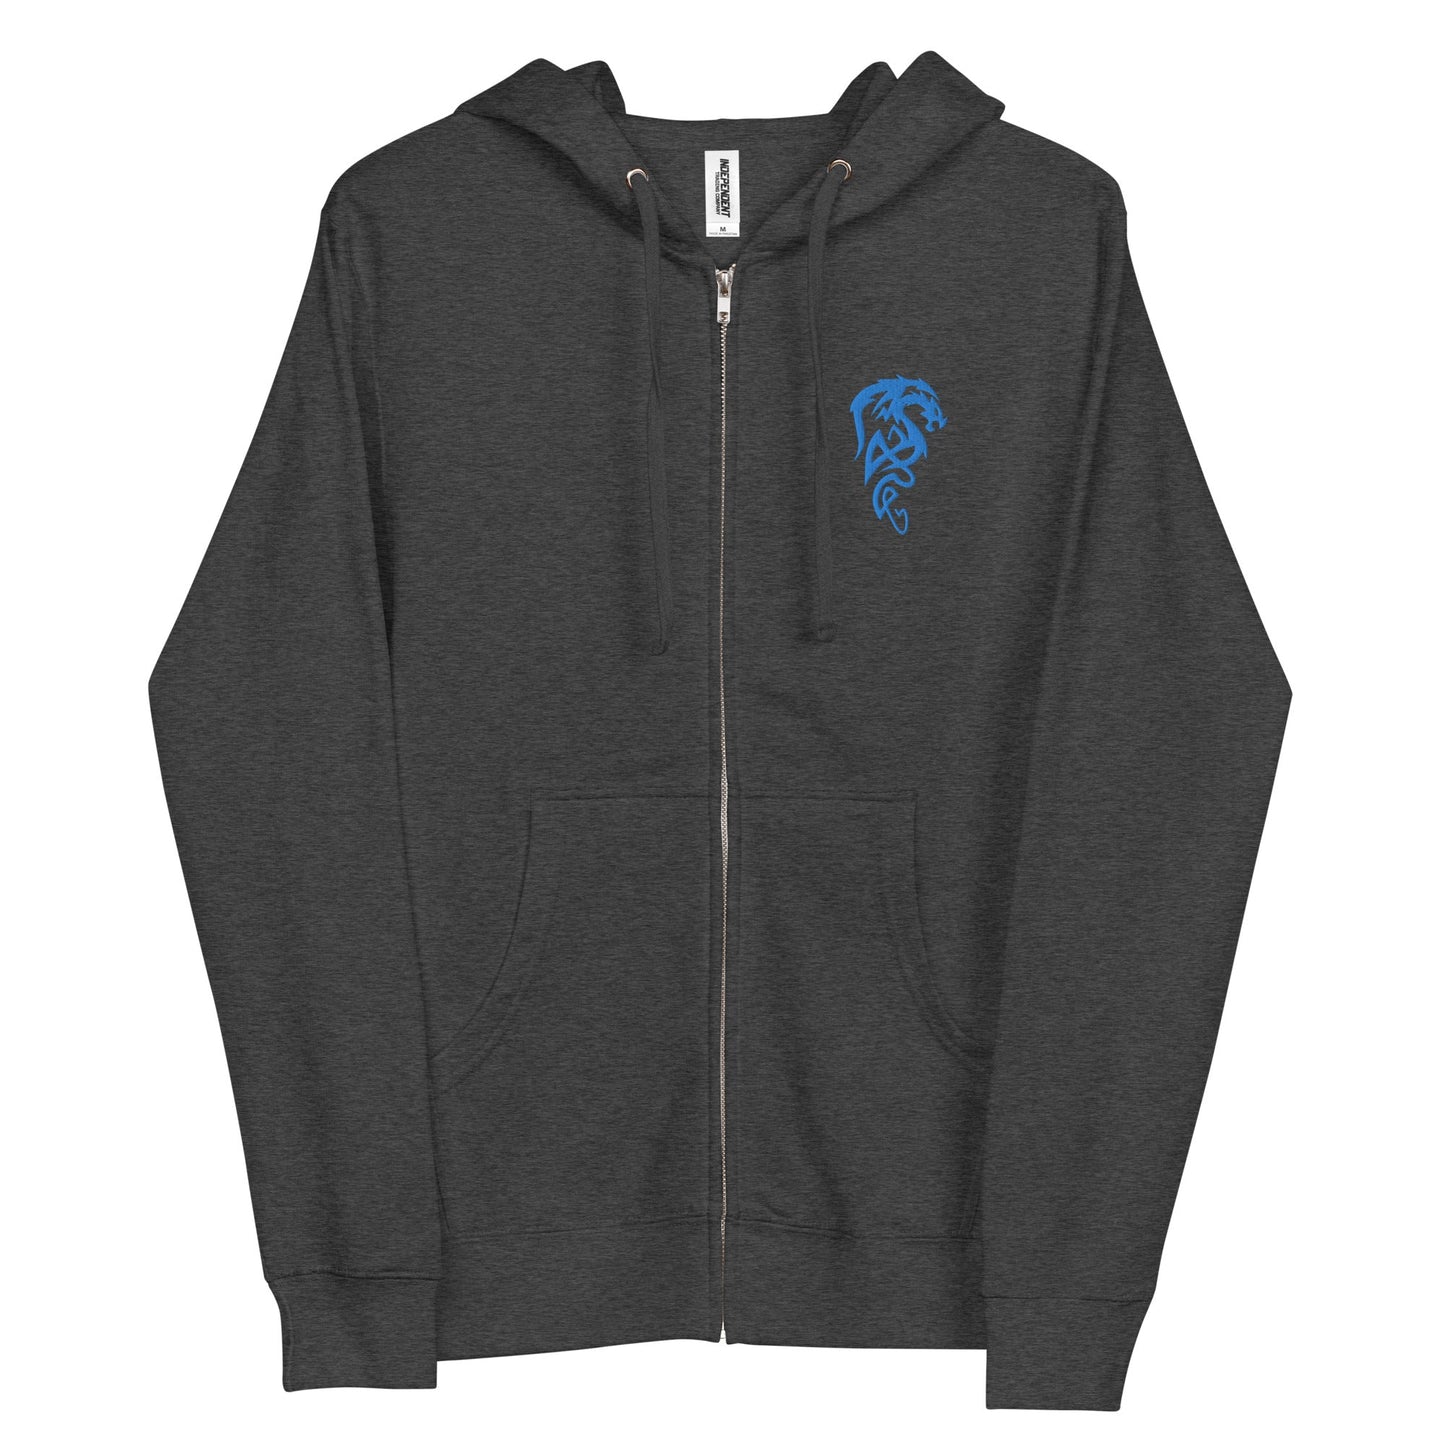 Embroidered Teal Dragon | Unisex fleece zip up hoodie